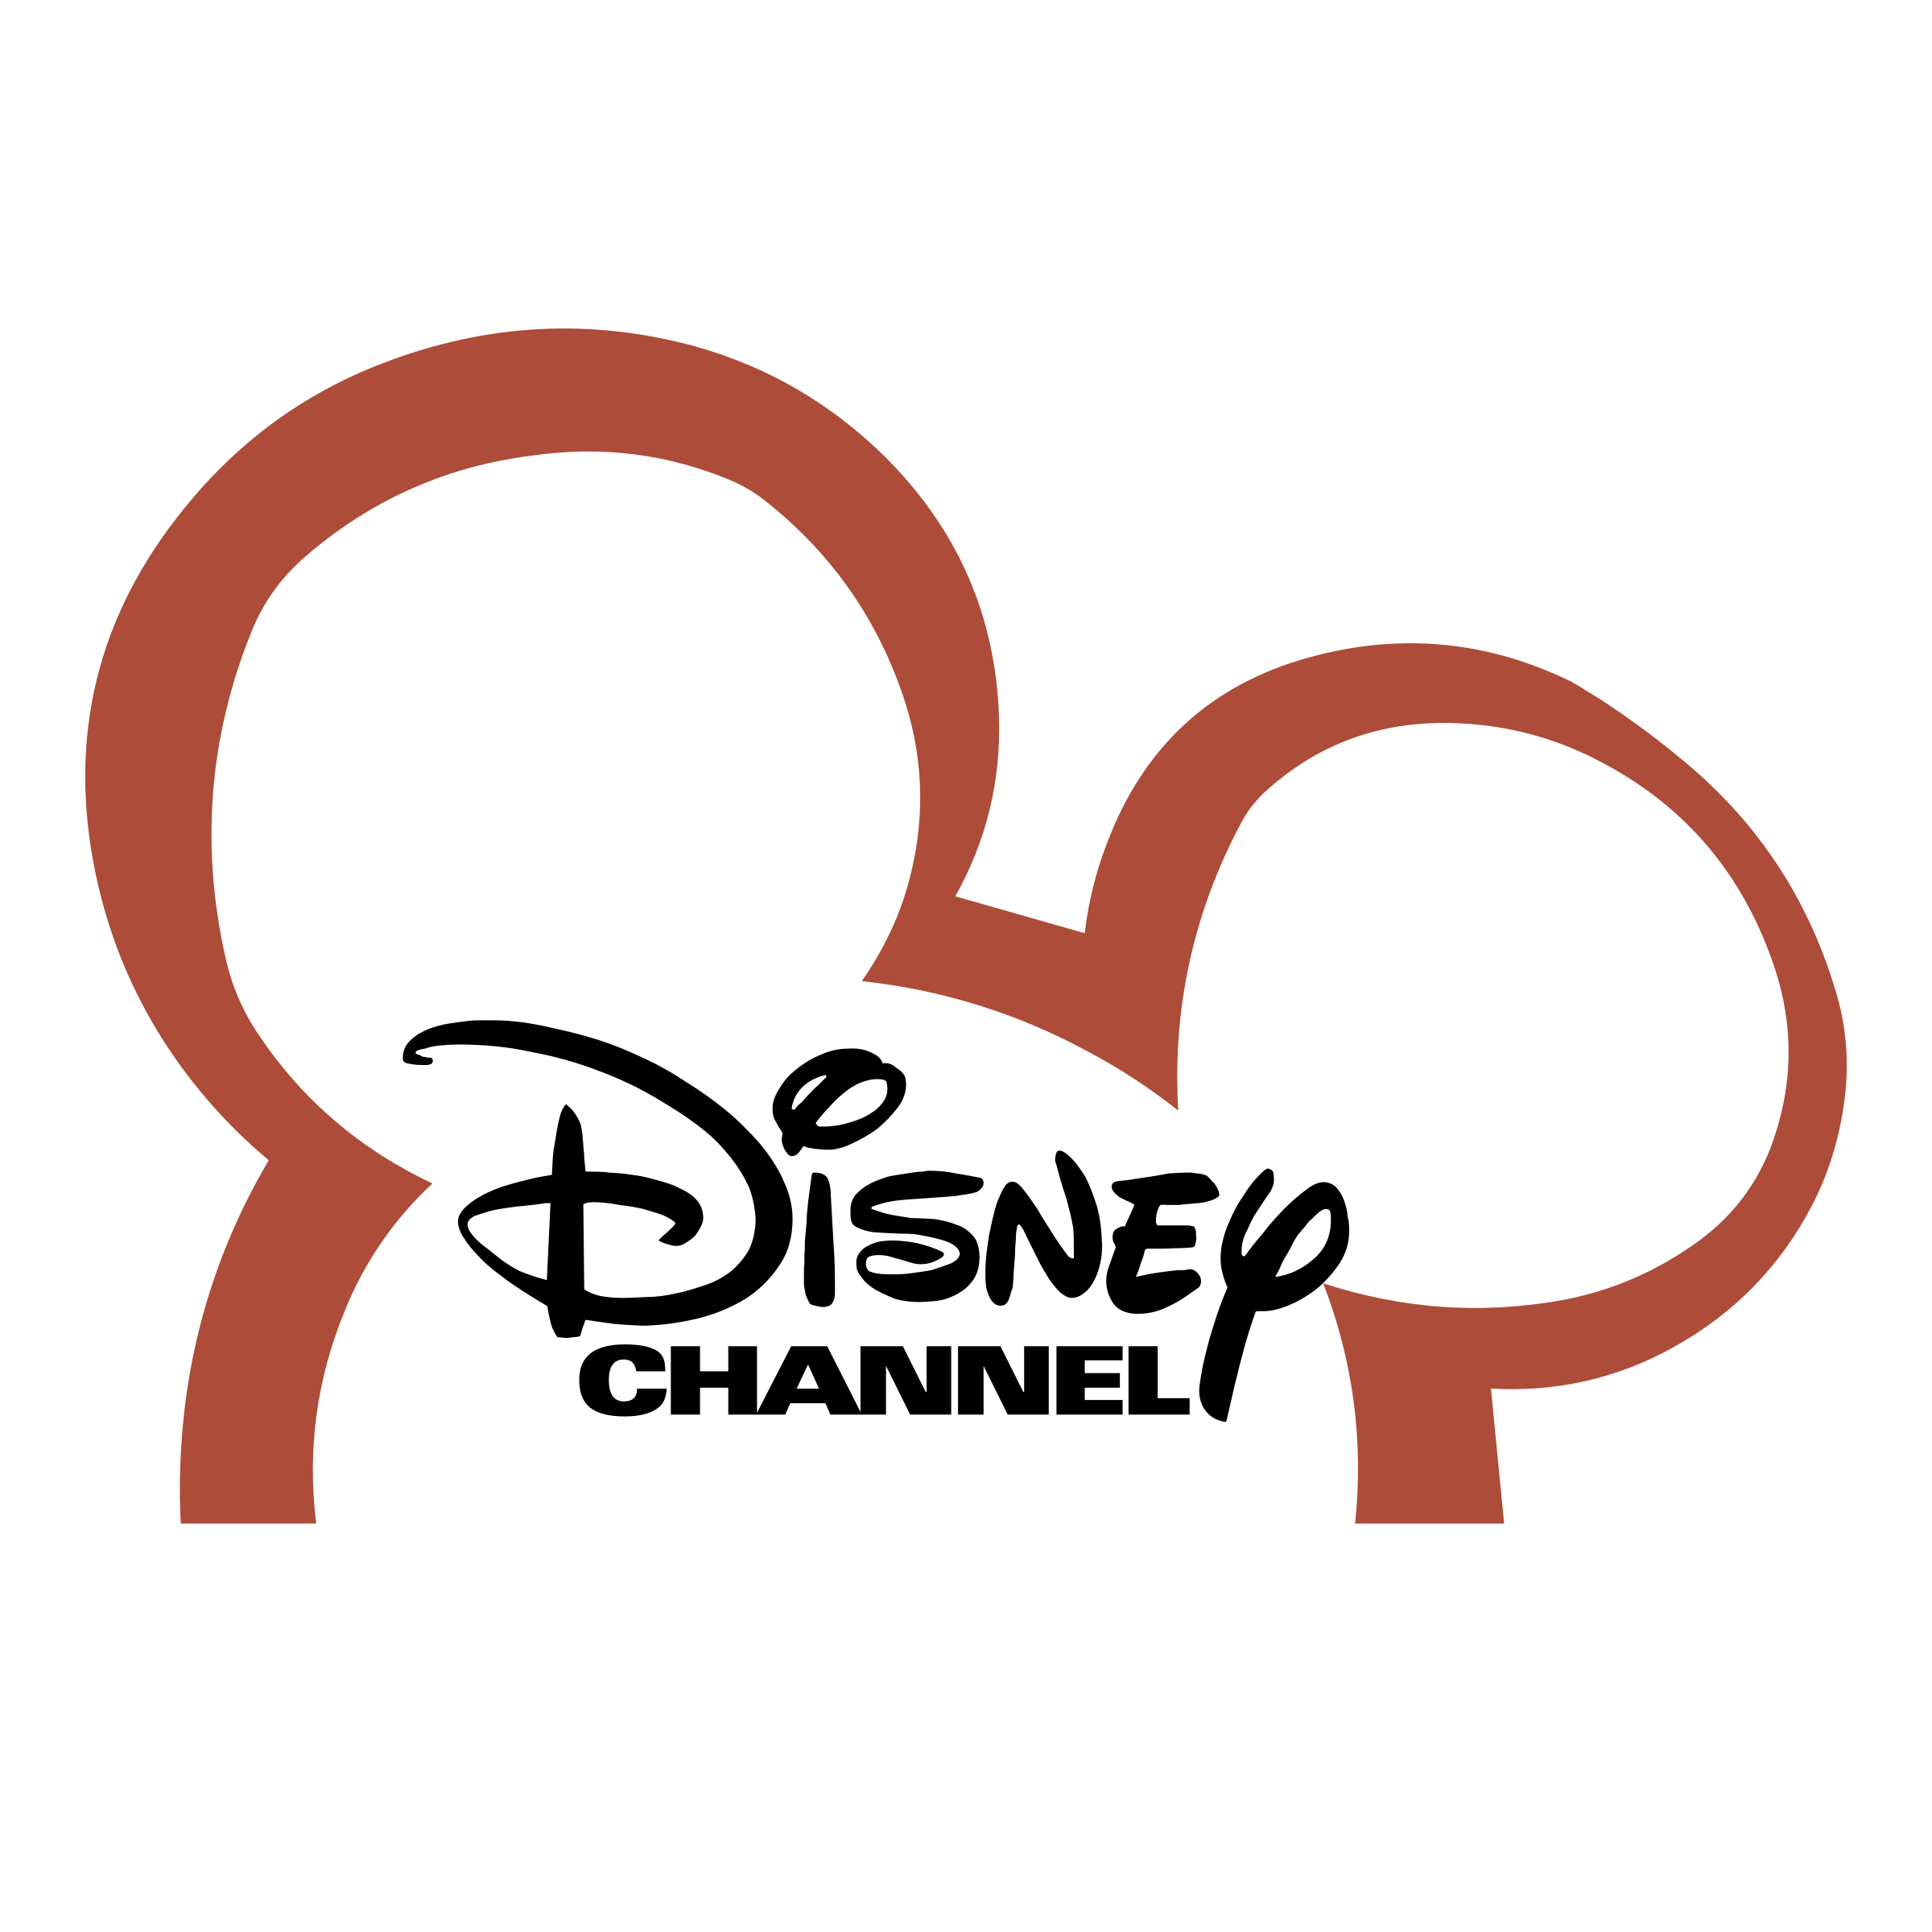 Disney.com Logo - Disney Channel Logo PNG Transparent & SVG Vector - Freebie Supply